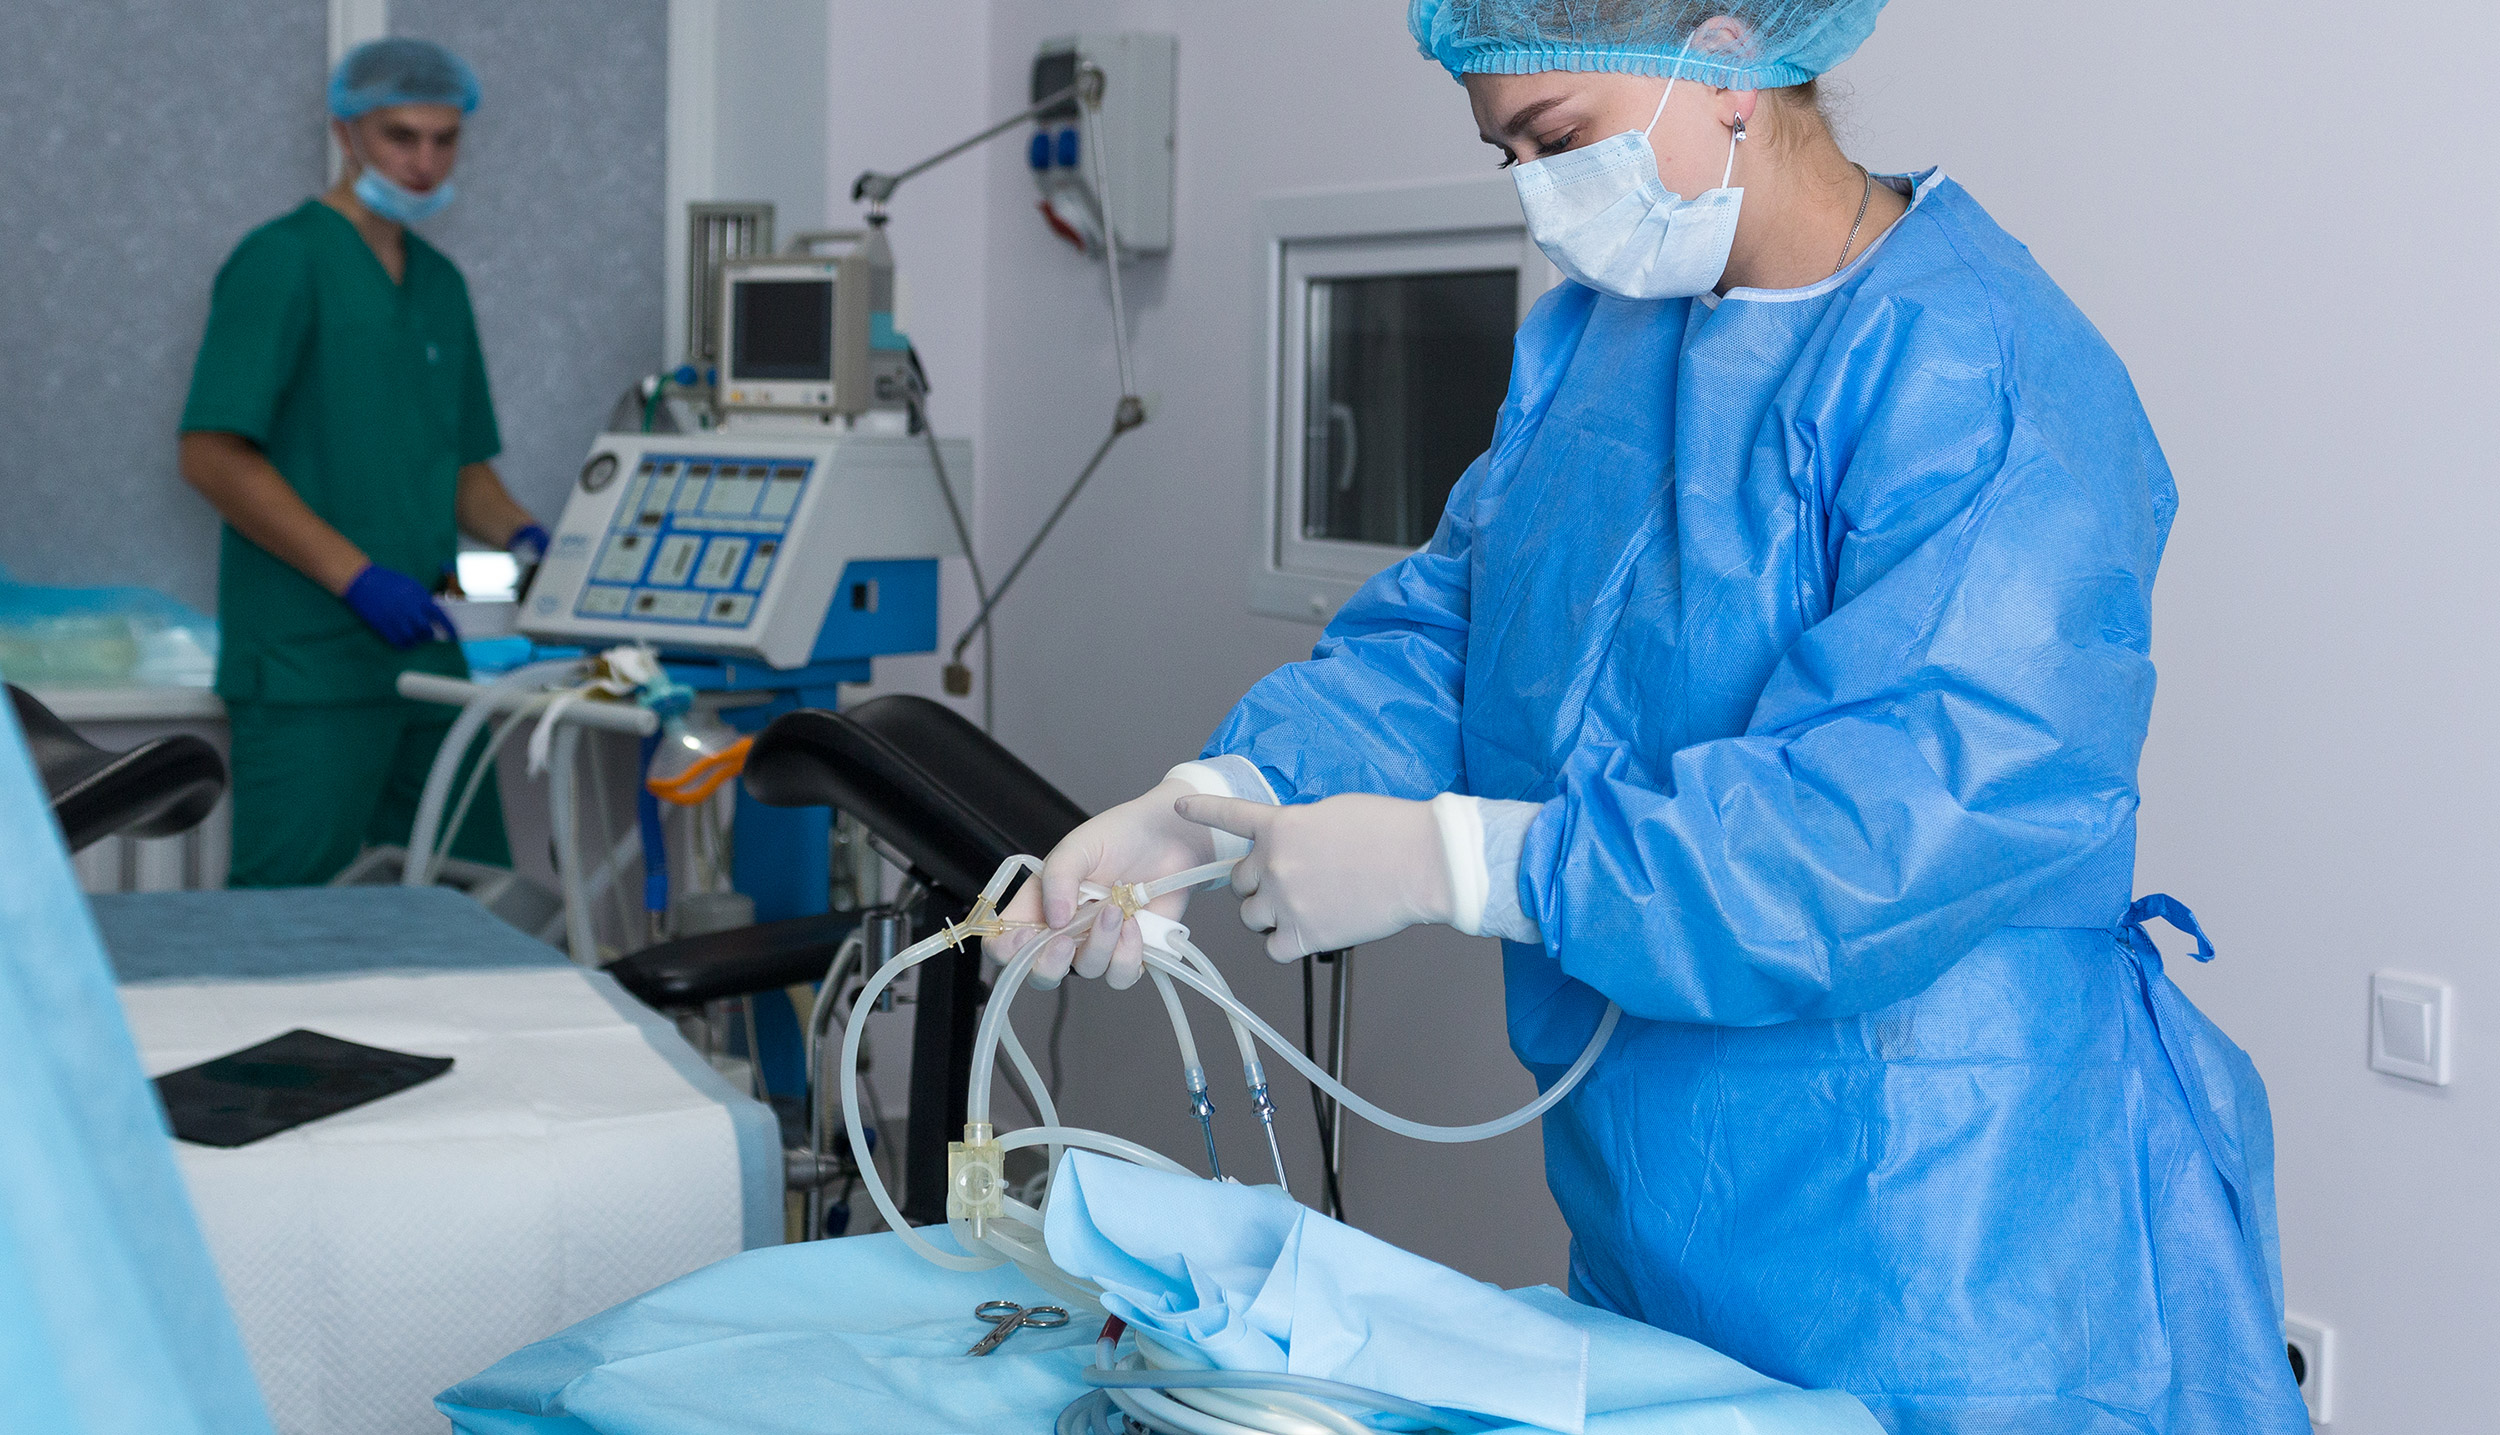 Endoscopes in a hospital setting